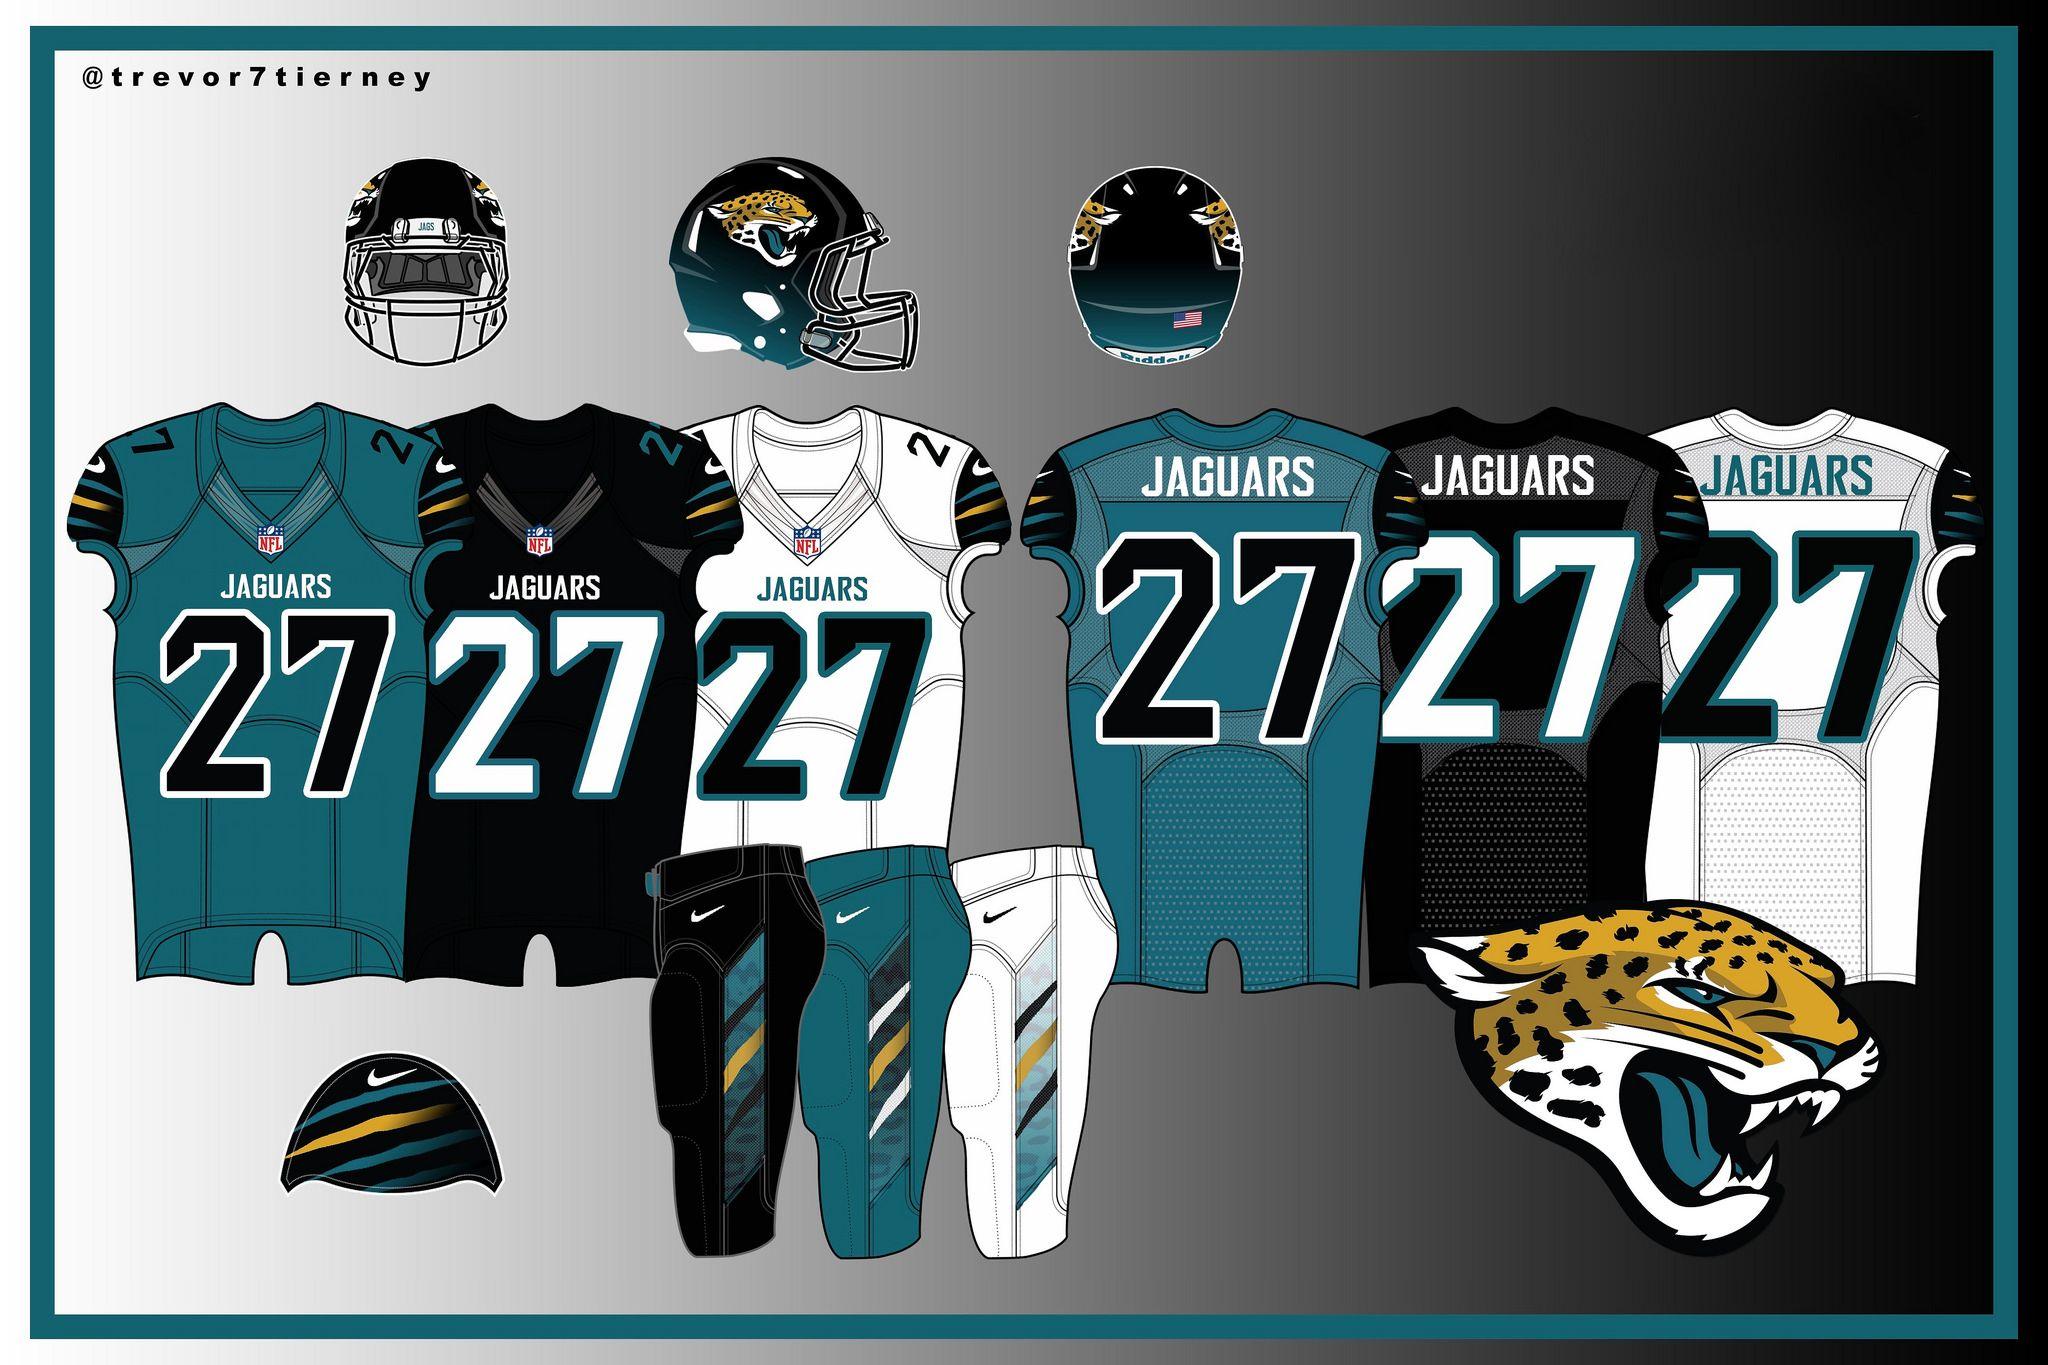 Jax Jaguars Logo - Uni Watch delivers the winning entries for the Jacksonville Jaguars